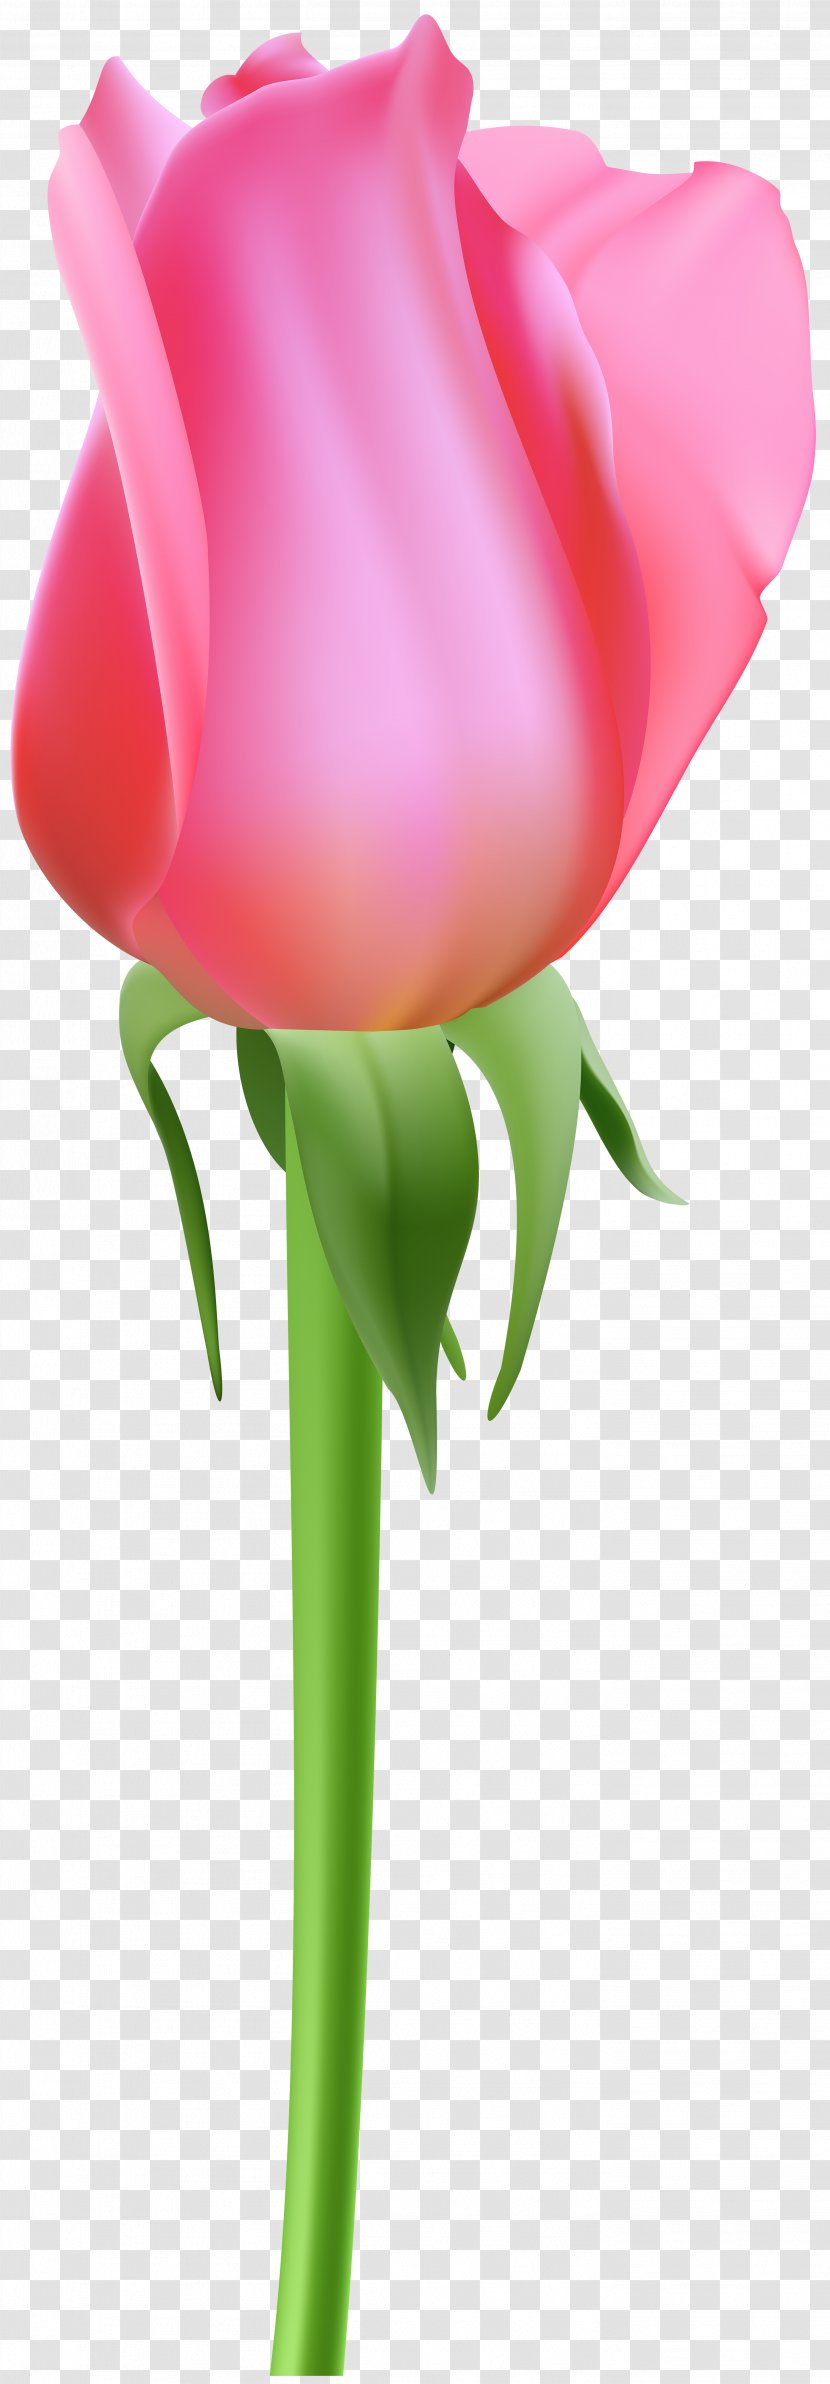 Garden Roses Clip Art Image Graphics - Cut Flowers - Rose Transparent PNG